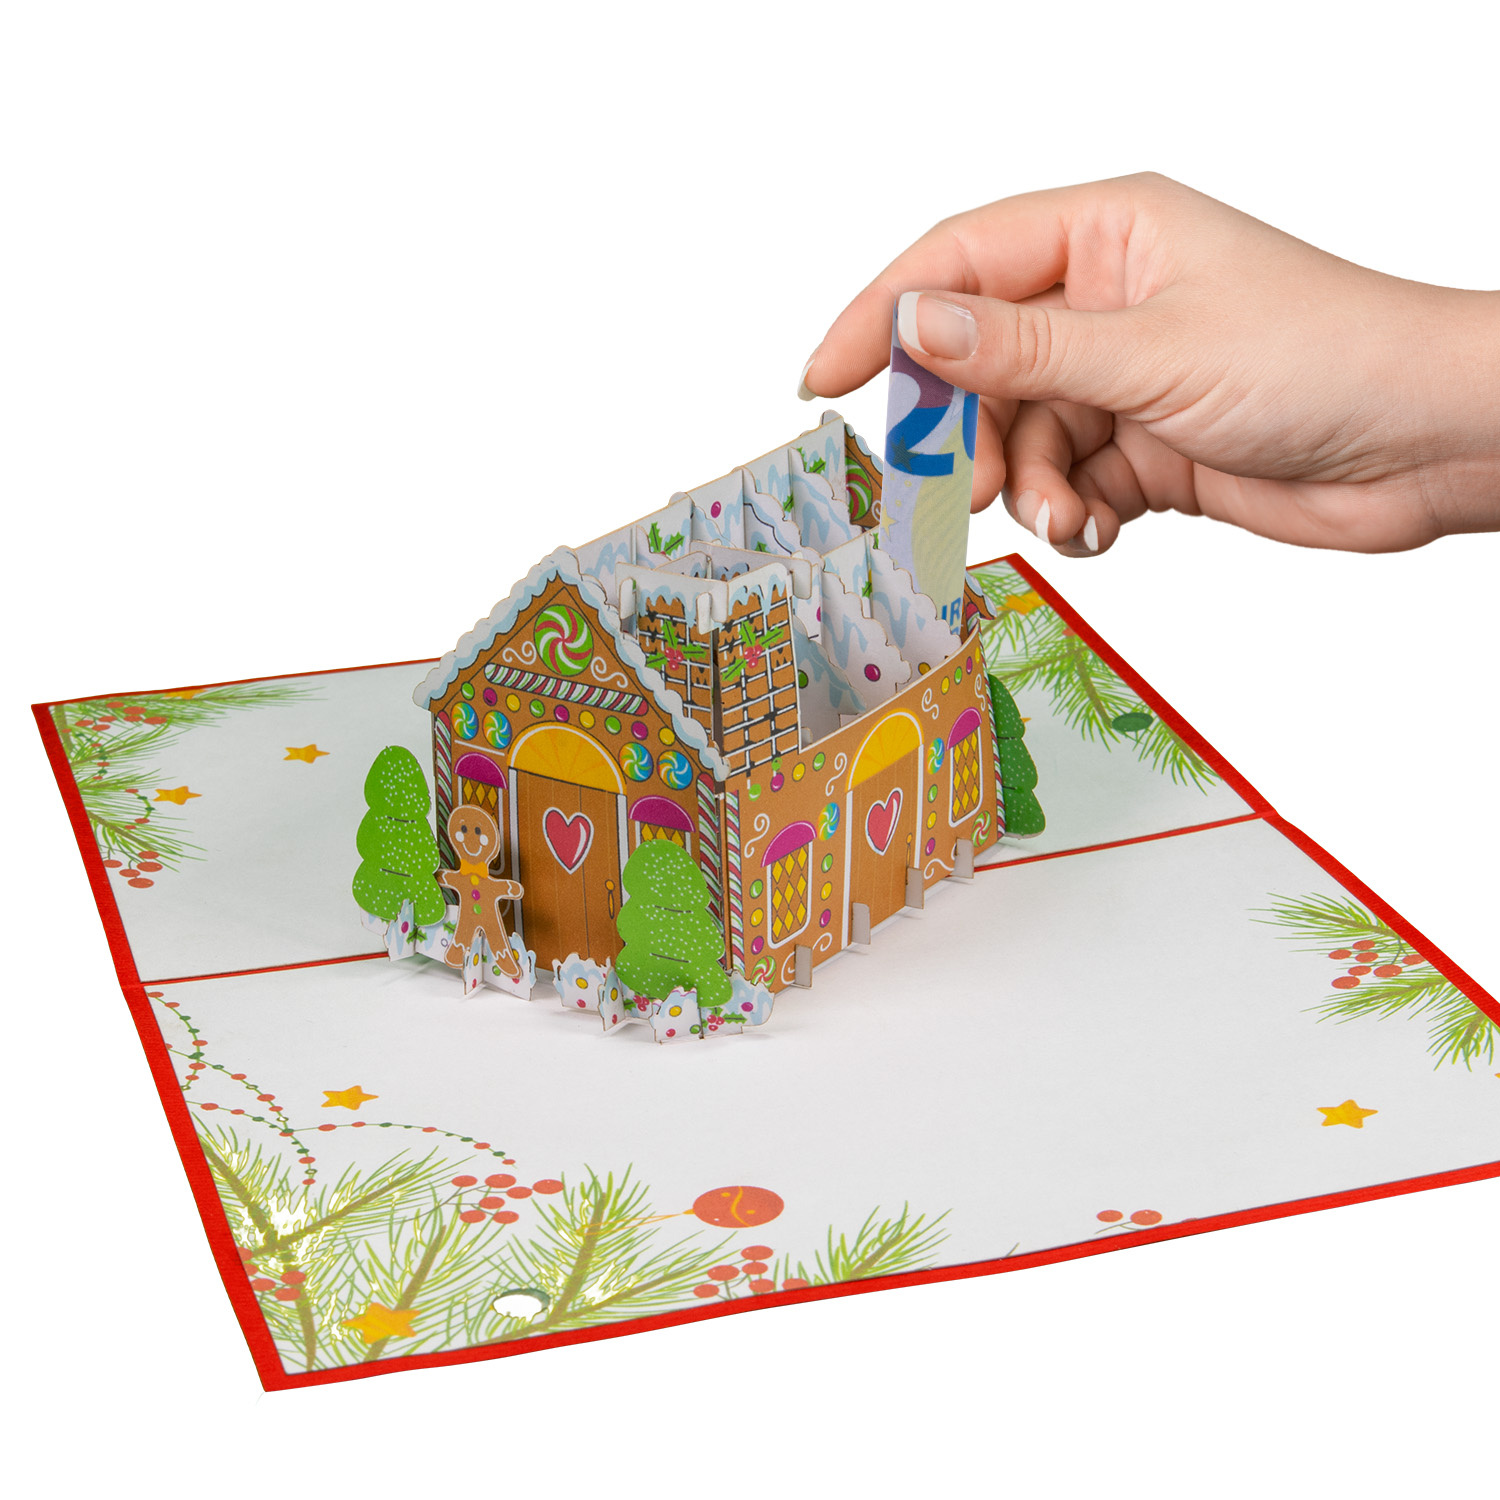 LINPOPUP LINPOPUP, Pop-Up Card Christmas, Christmas House - Gingerbread - Card, 3d Christmas Card, Christmas Gift Card, Gingerbread House, N460